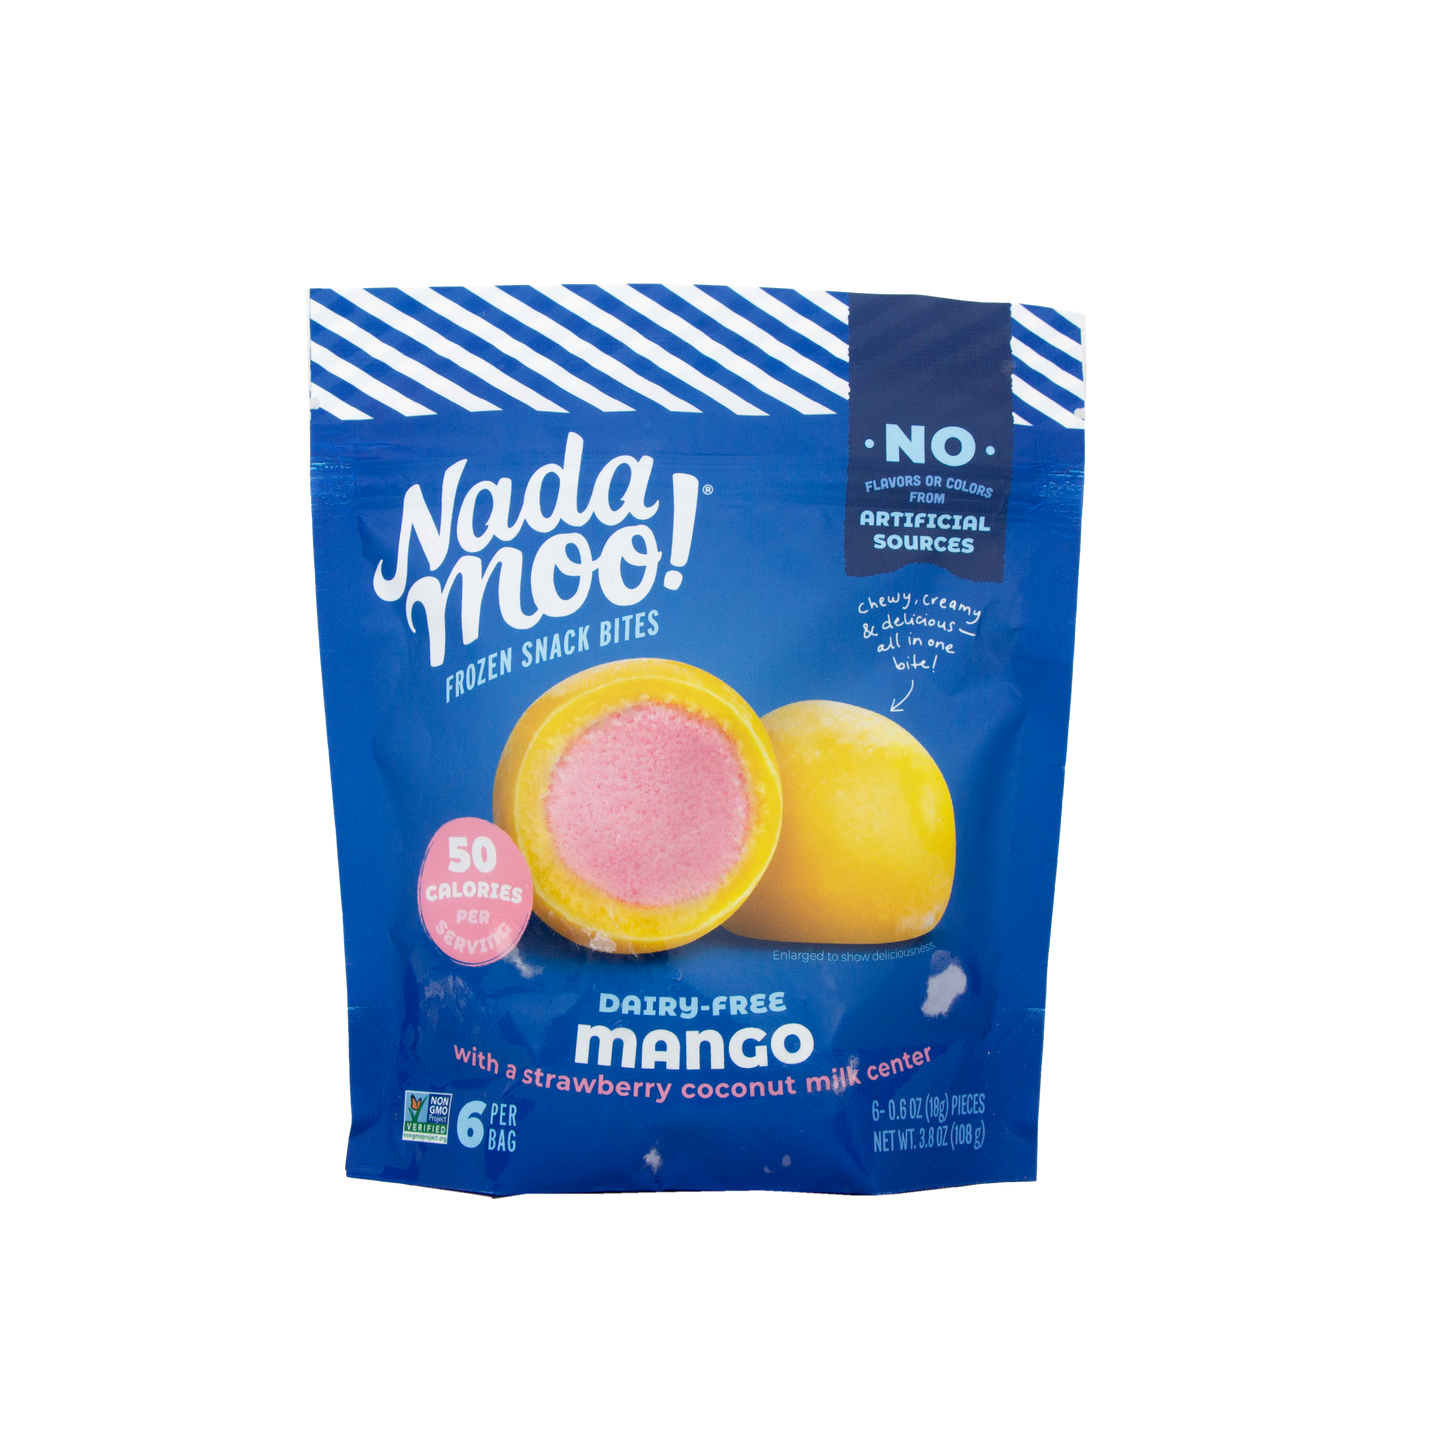 Nada Moo! - Frozen Snacks Bites Mango (Store Pick-Up Only)